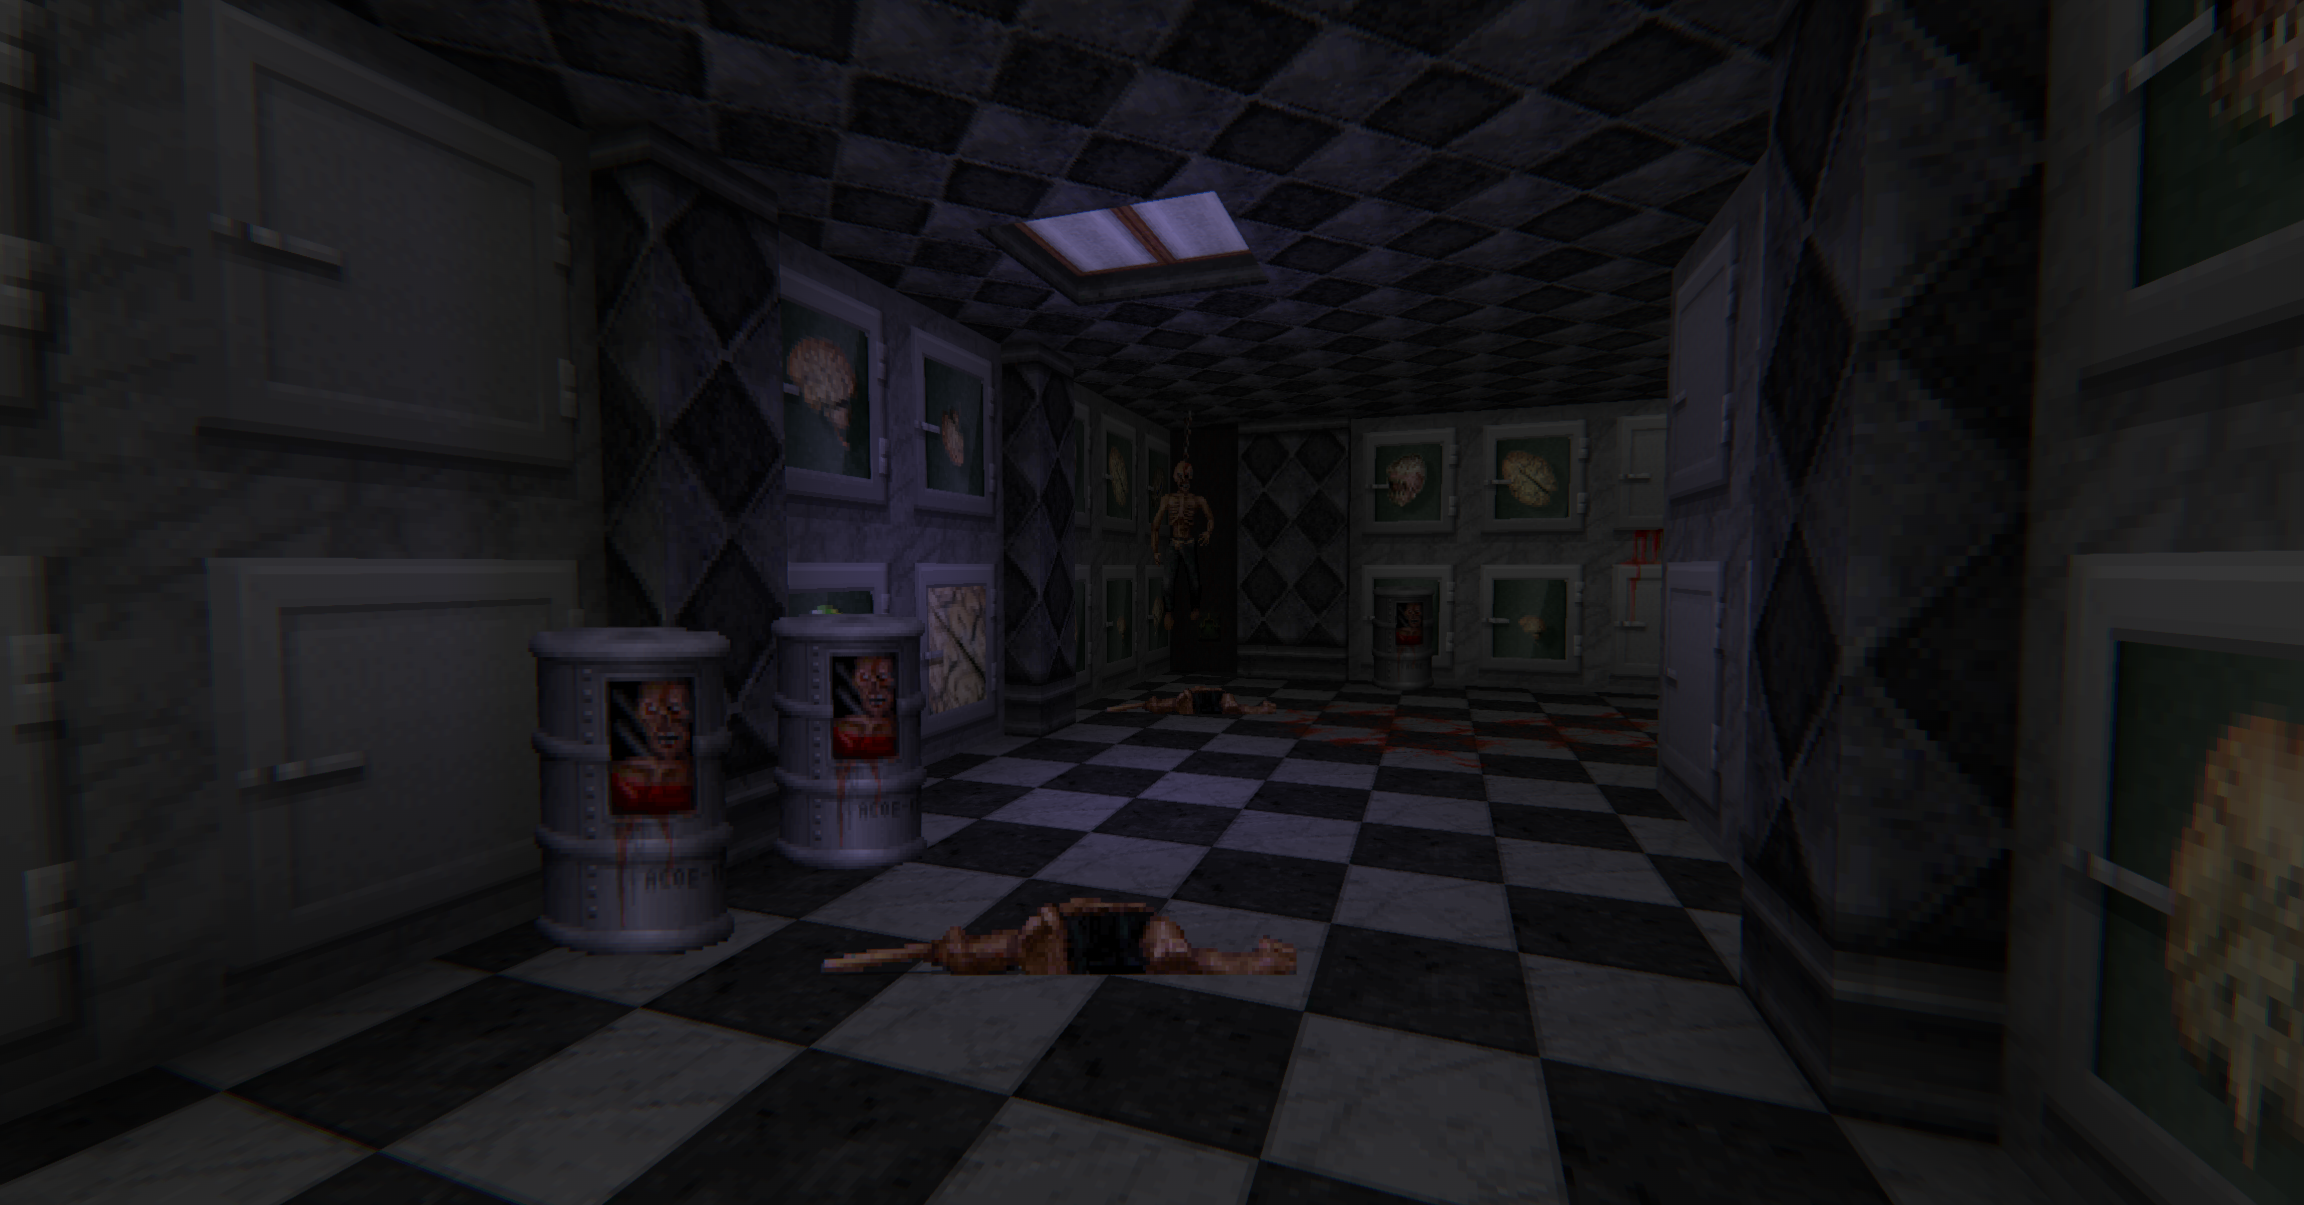 Five Nights at Freddy's 2 Doom Mod REMAKE Release DOWNLOAD in description 